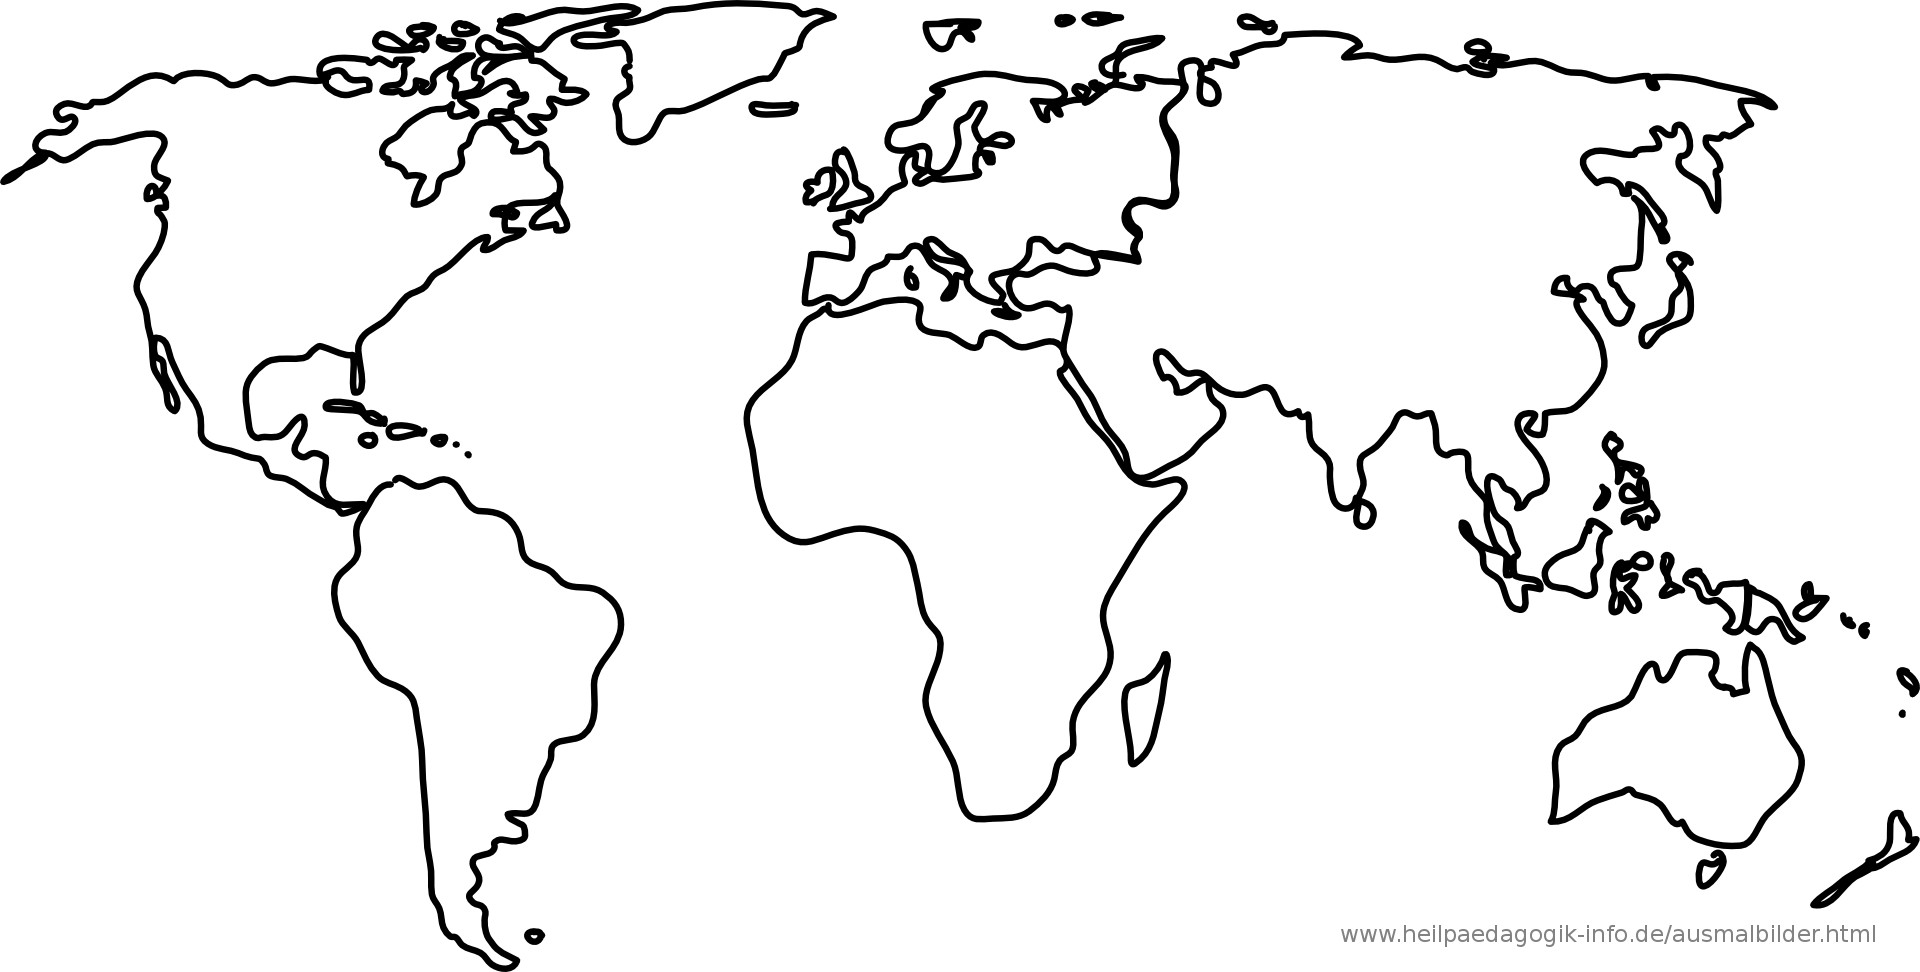 Ausmalbilder Weltkarte
 Ausmalbilder Schule